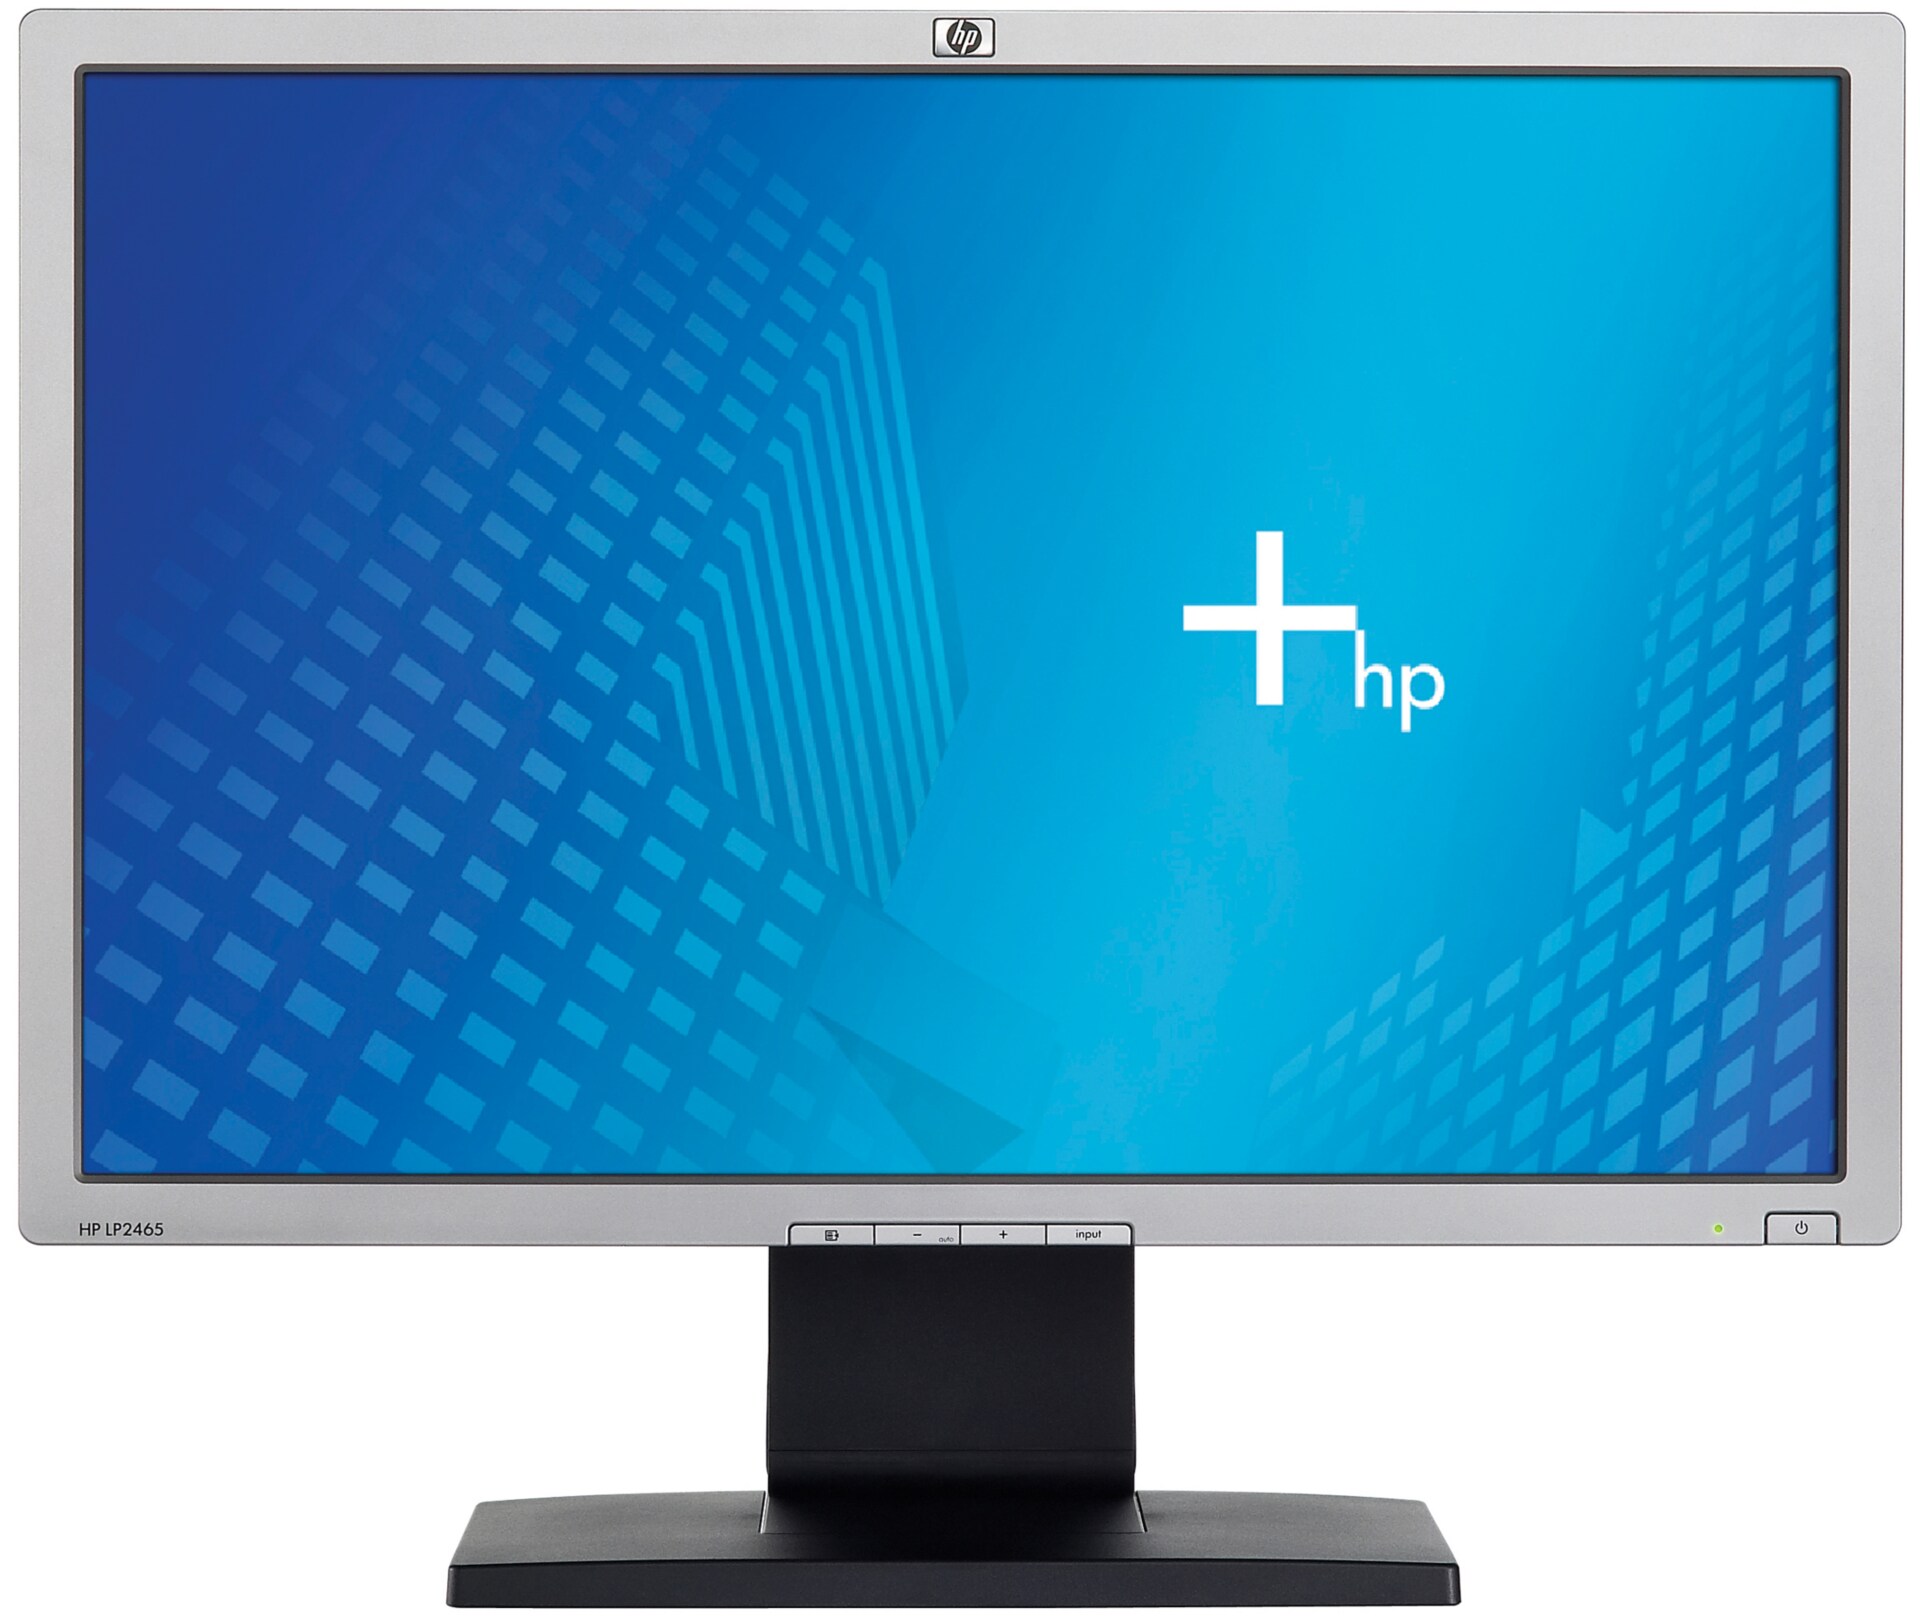 HP Smart Buy LP2465 24" LCD Display